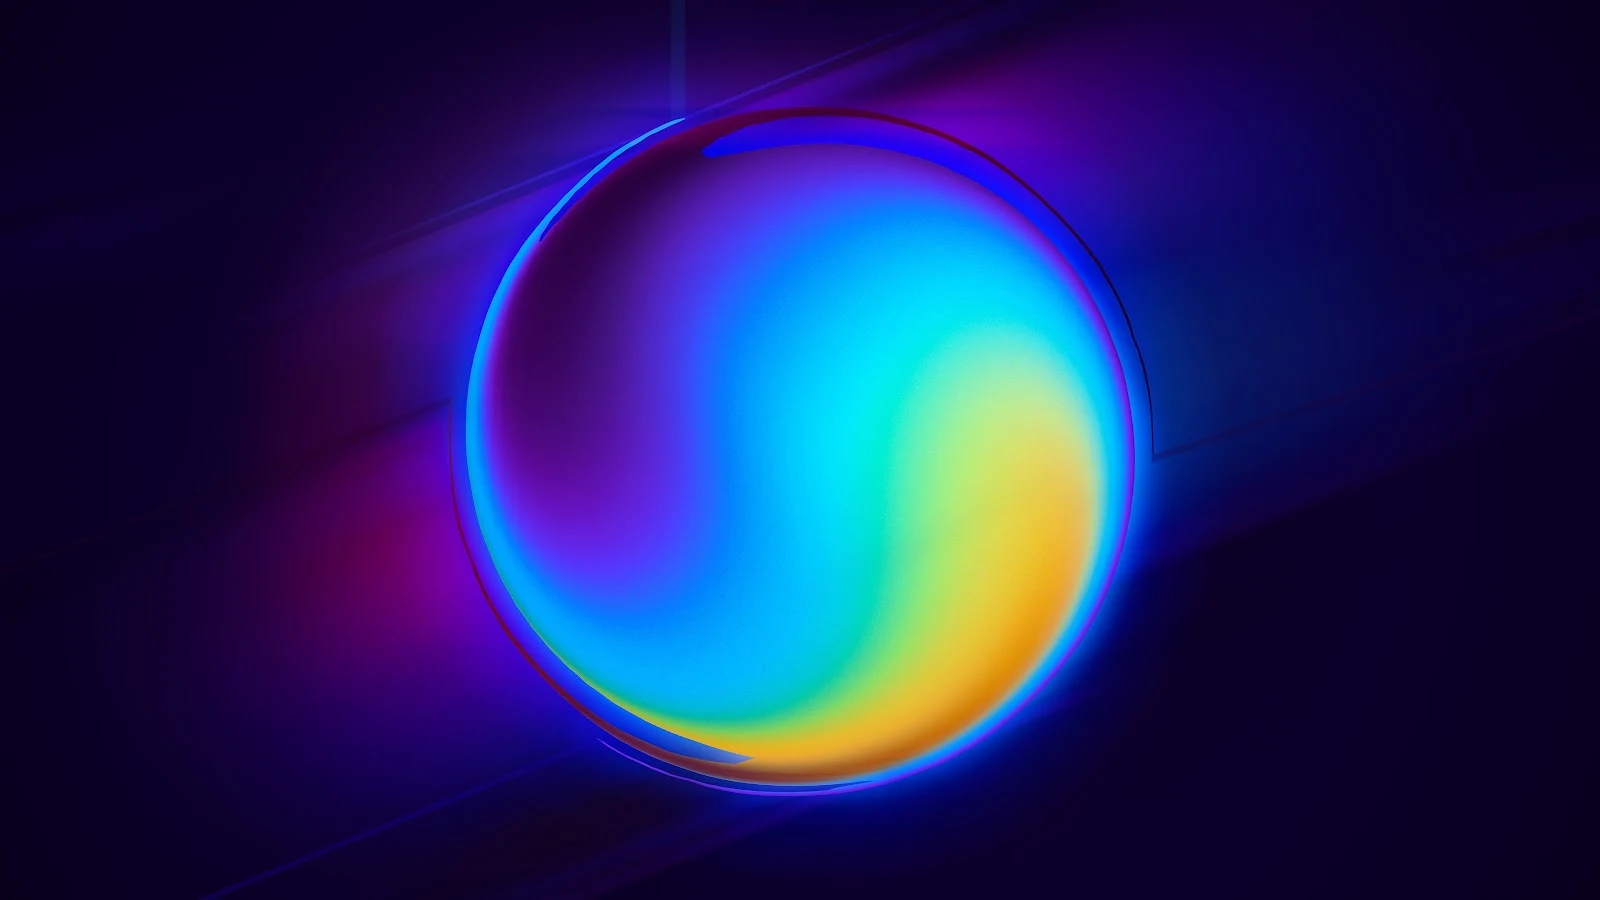 Abstract, Circle, Digital Art, Colorful, Blue, Purple Desktop, iPhone Wallpaper Background